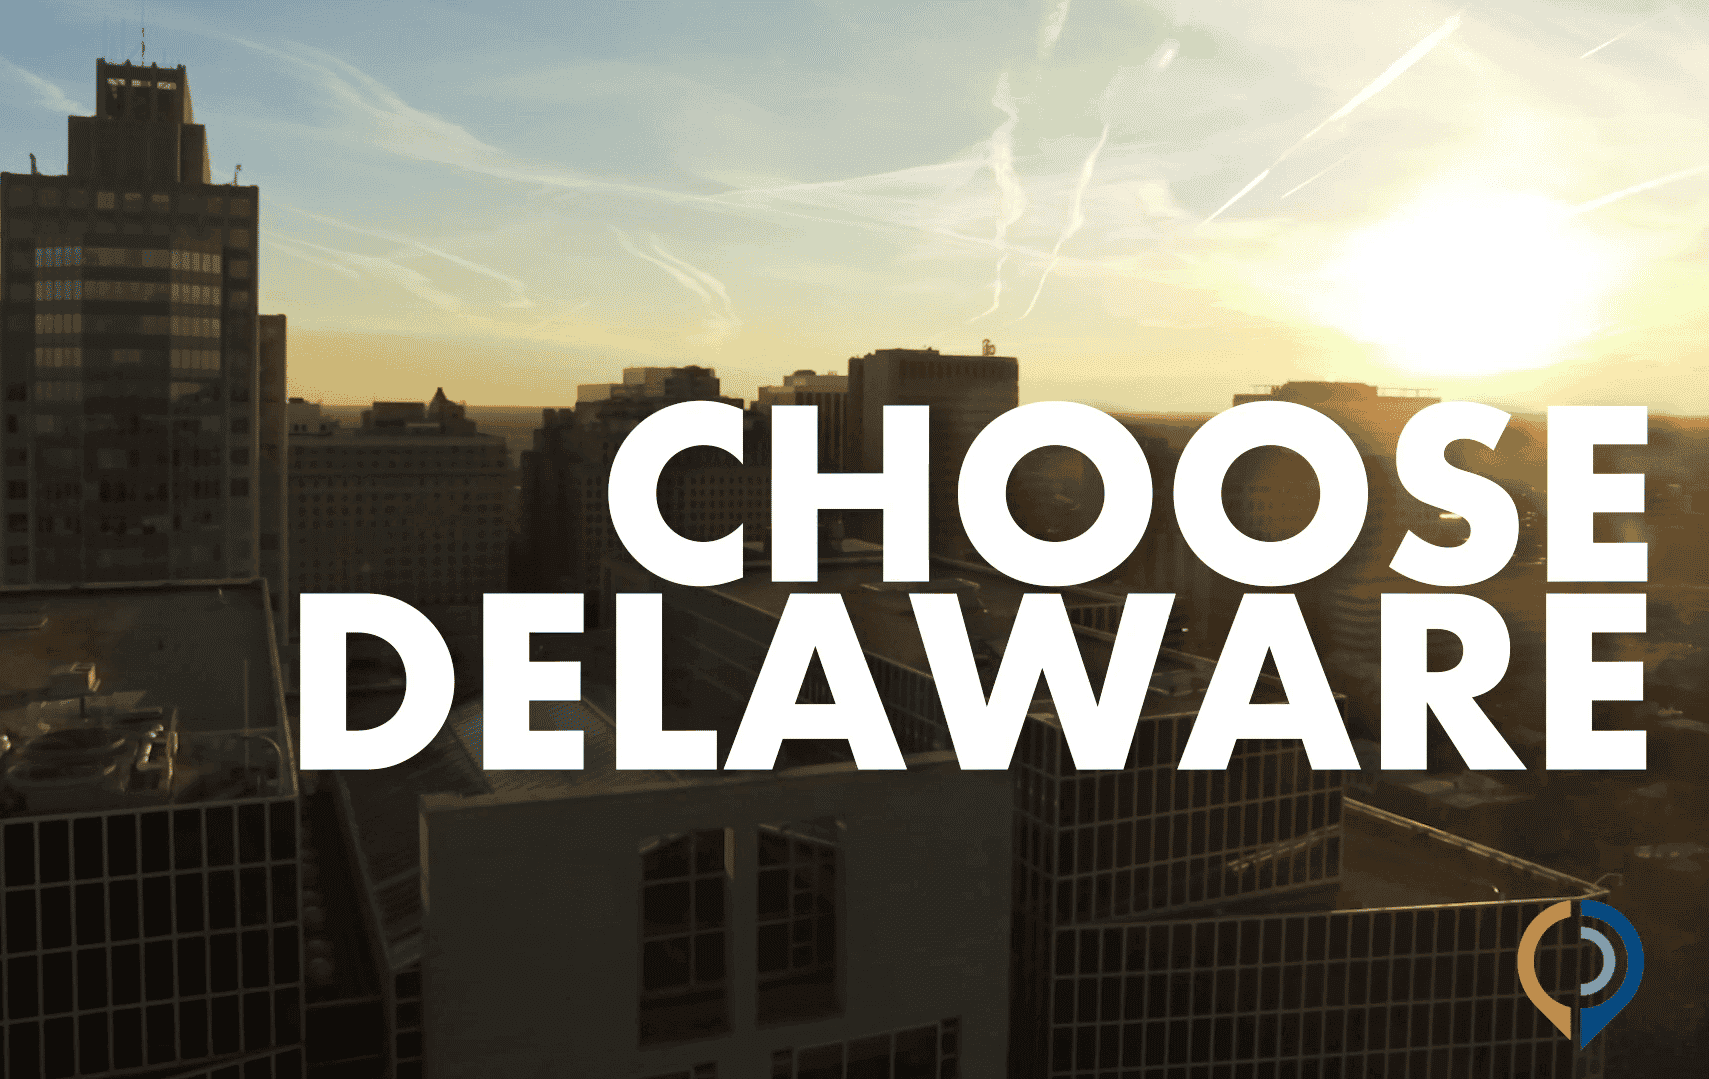 Delaware Prosperity Partnership